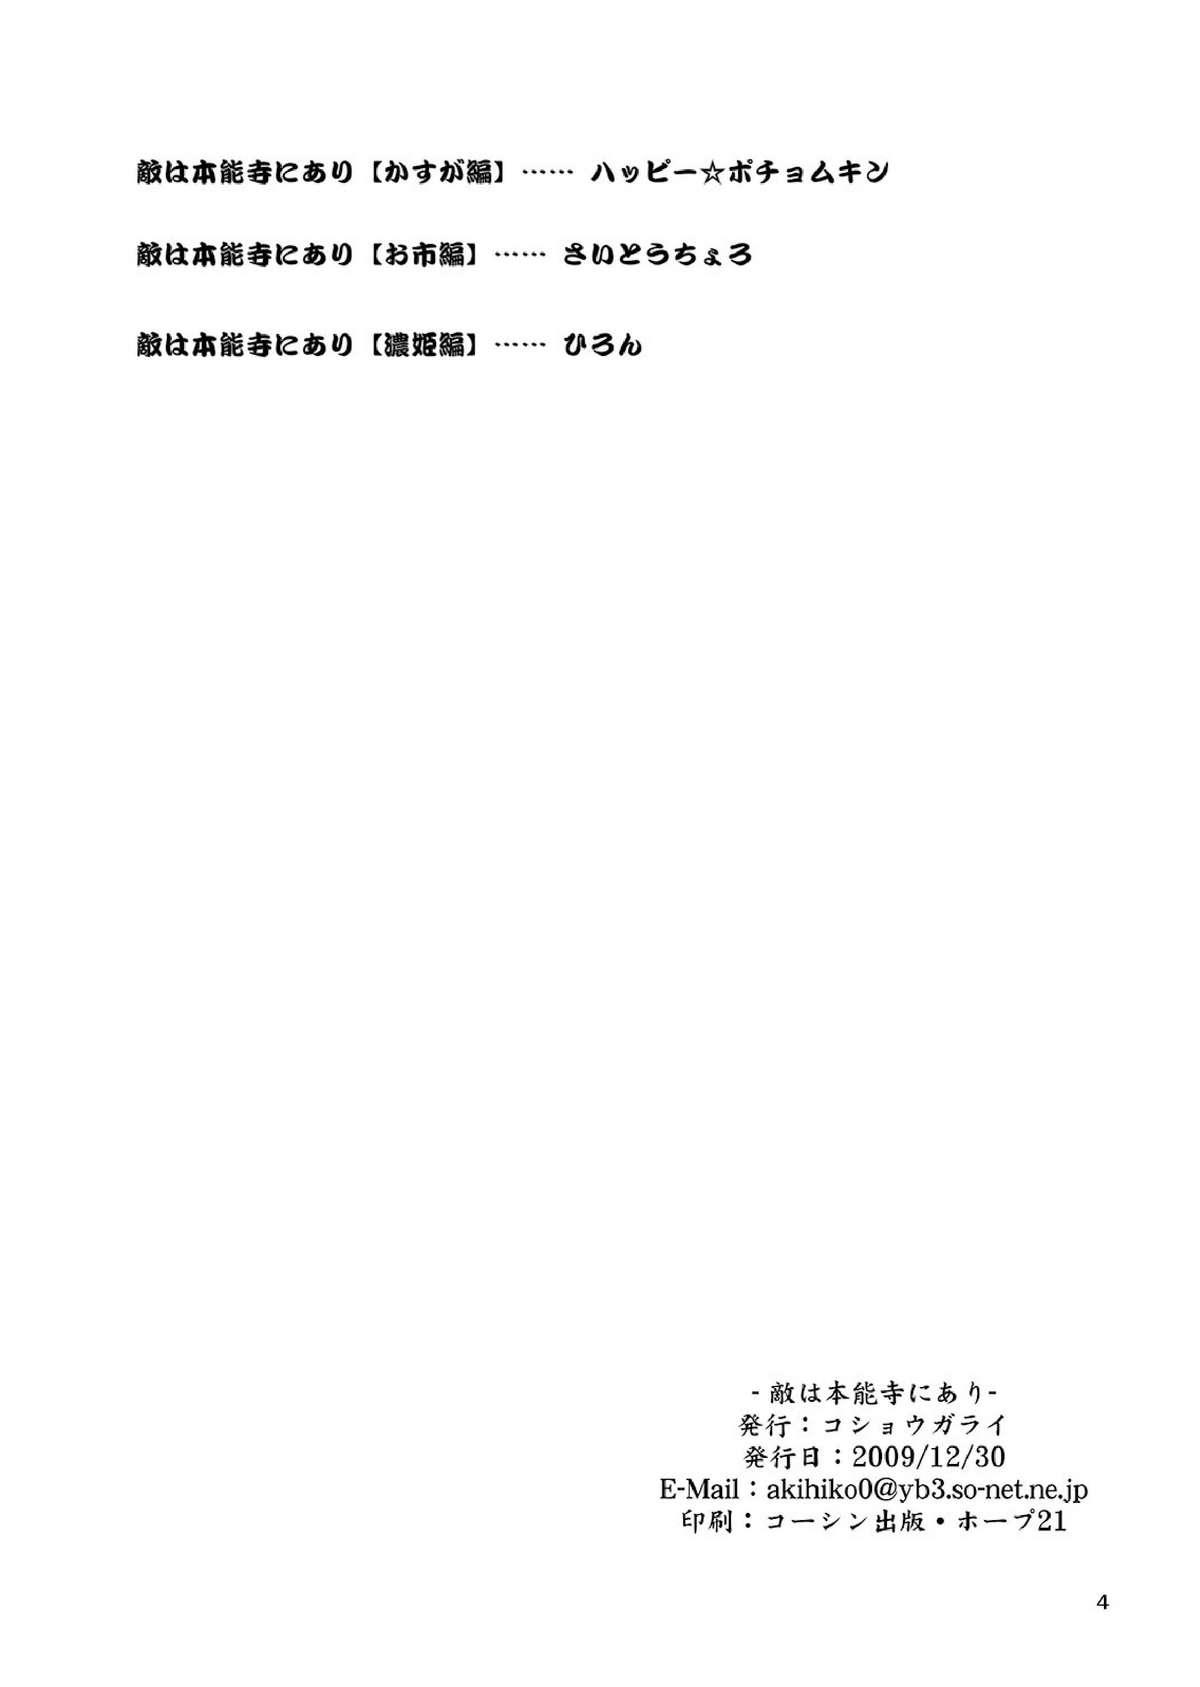 Peituda Tekihahon'noujiniari - Sengoku basara Tongue - Page 4